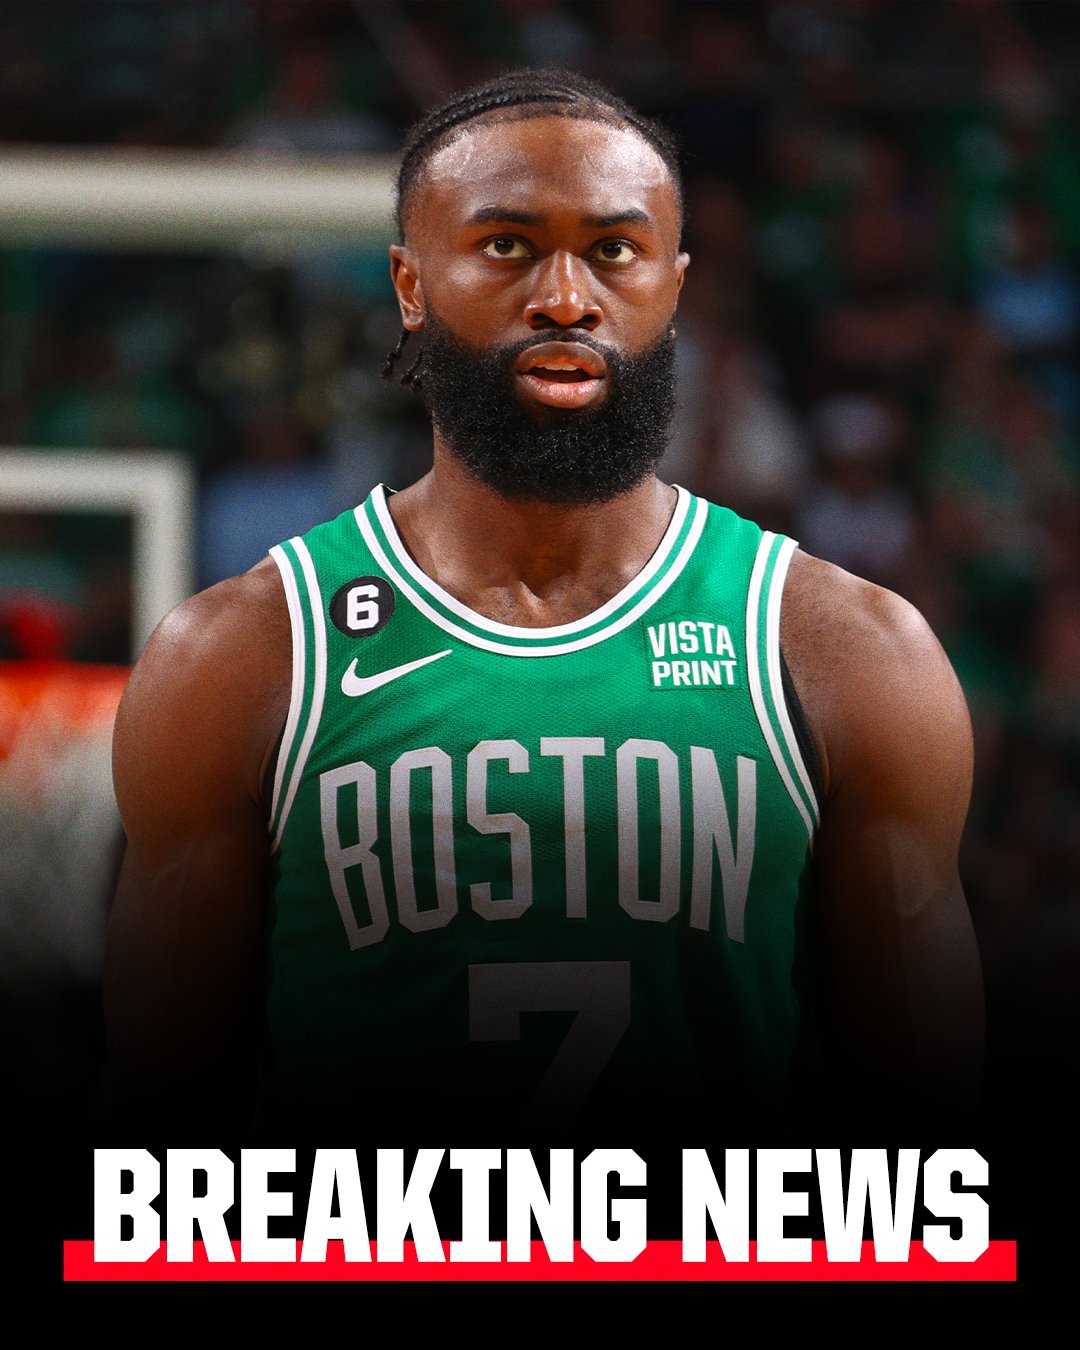 Boston Celtics sign Jaylen Brown to record-setting 5-year, $304M